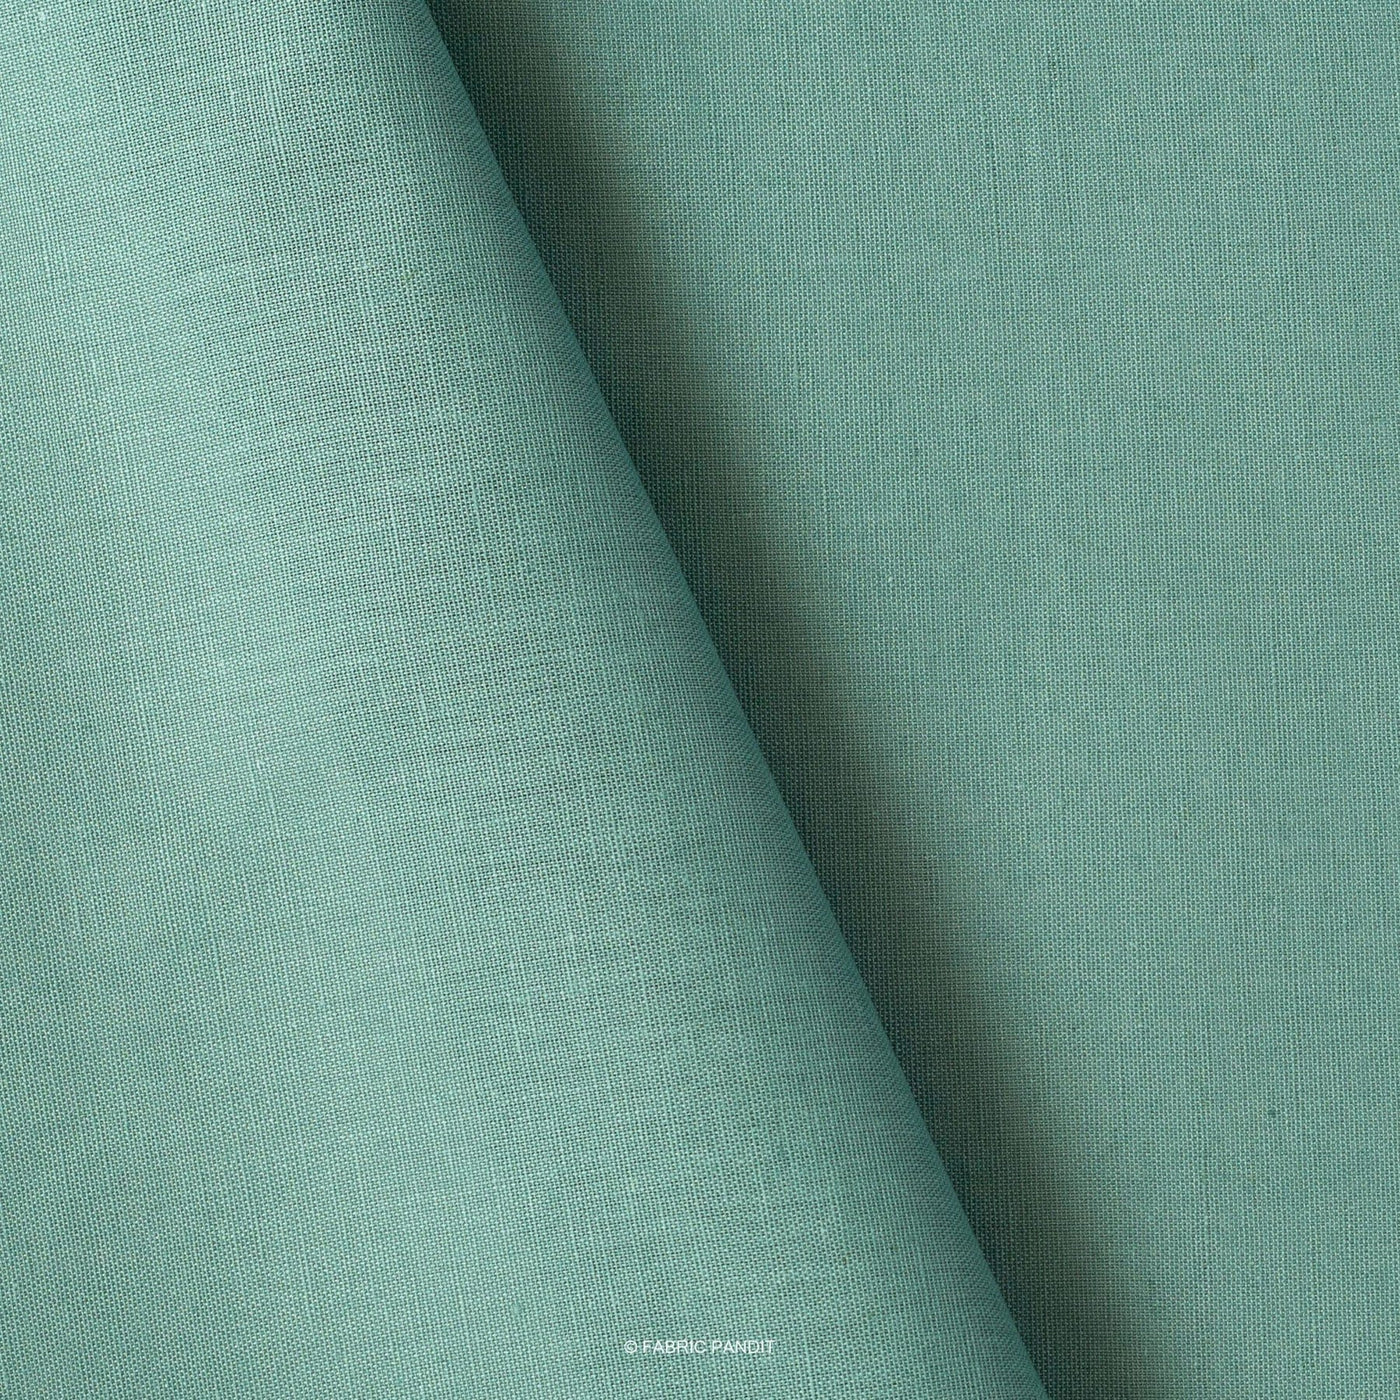 Fabric Pandit Fabric Aquamarine (Light) Color Pure Cotton Linen Fabric (Width 42 Inches)